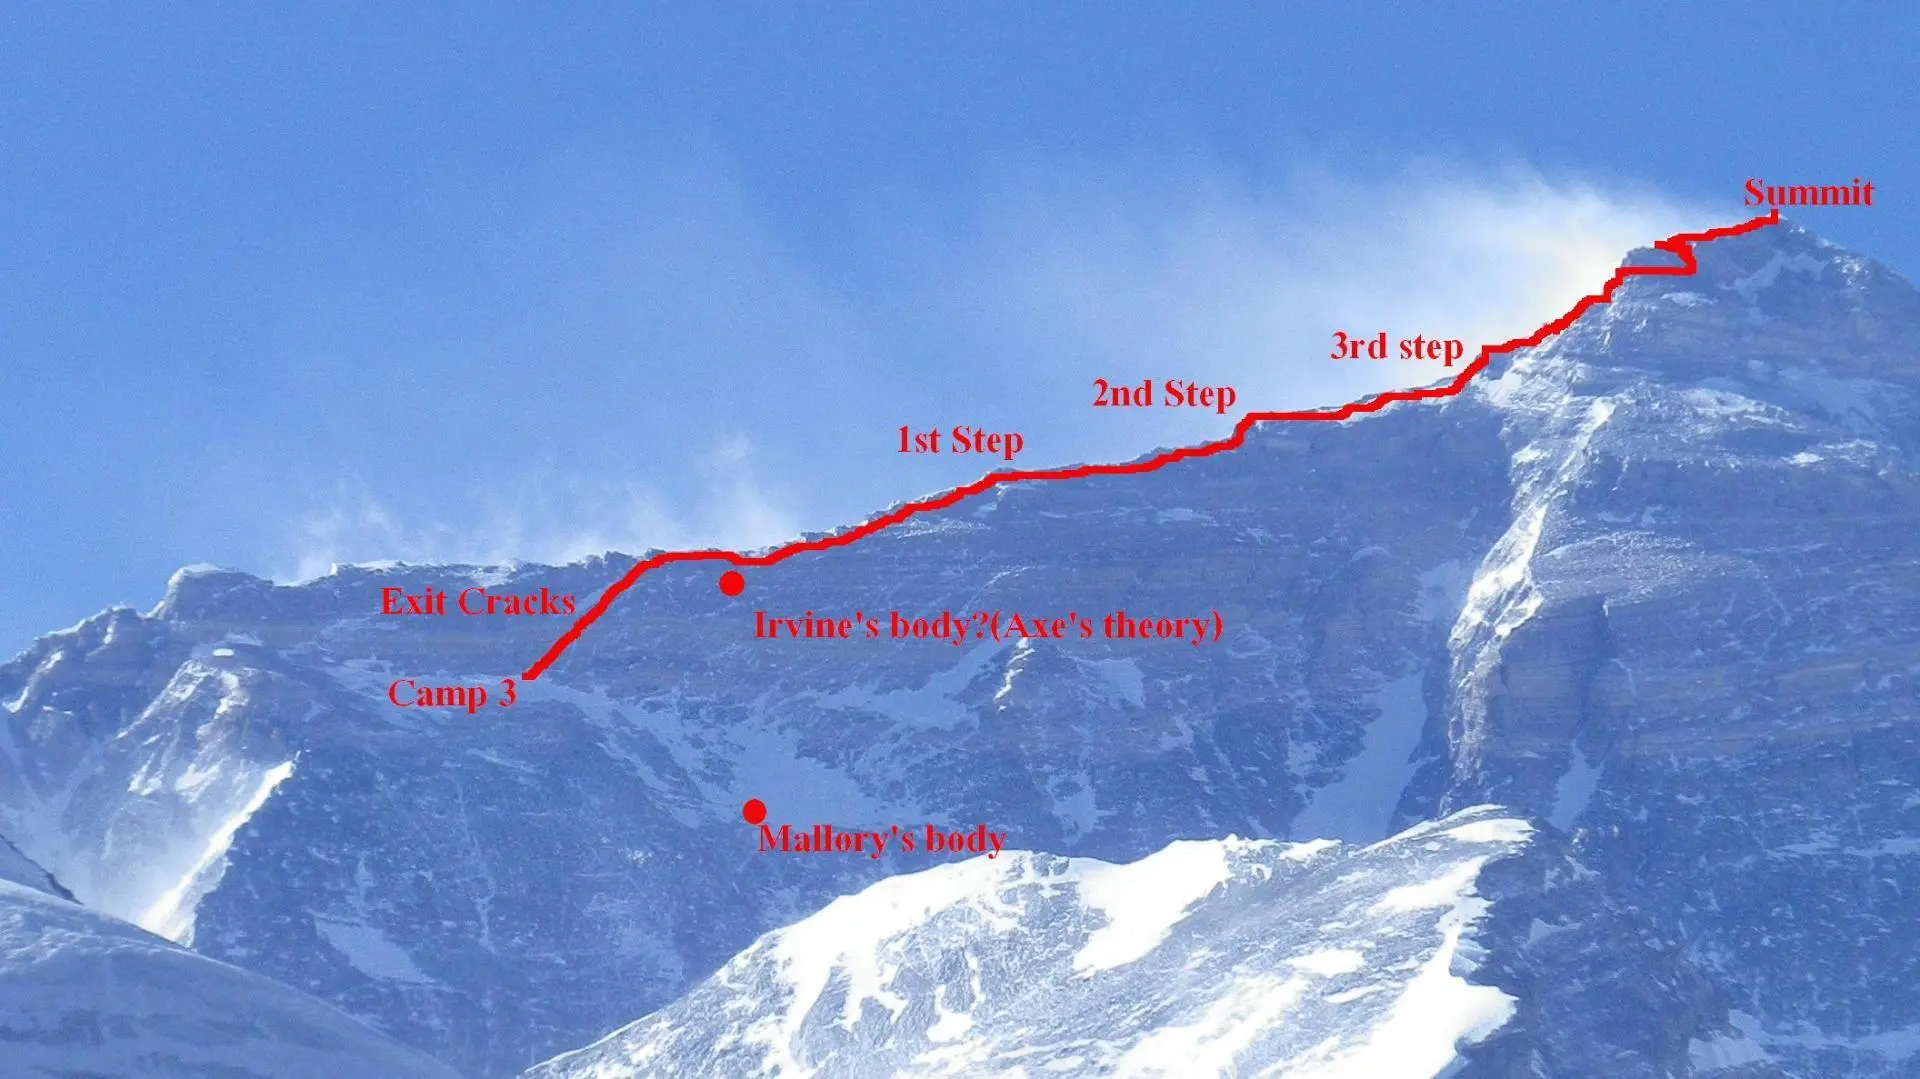 Lost on Everest_peliplat